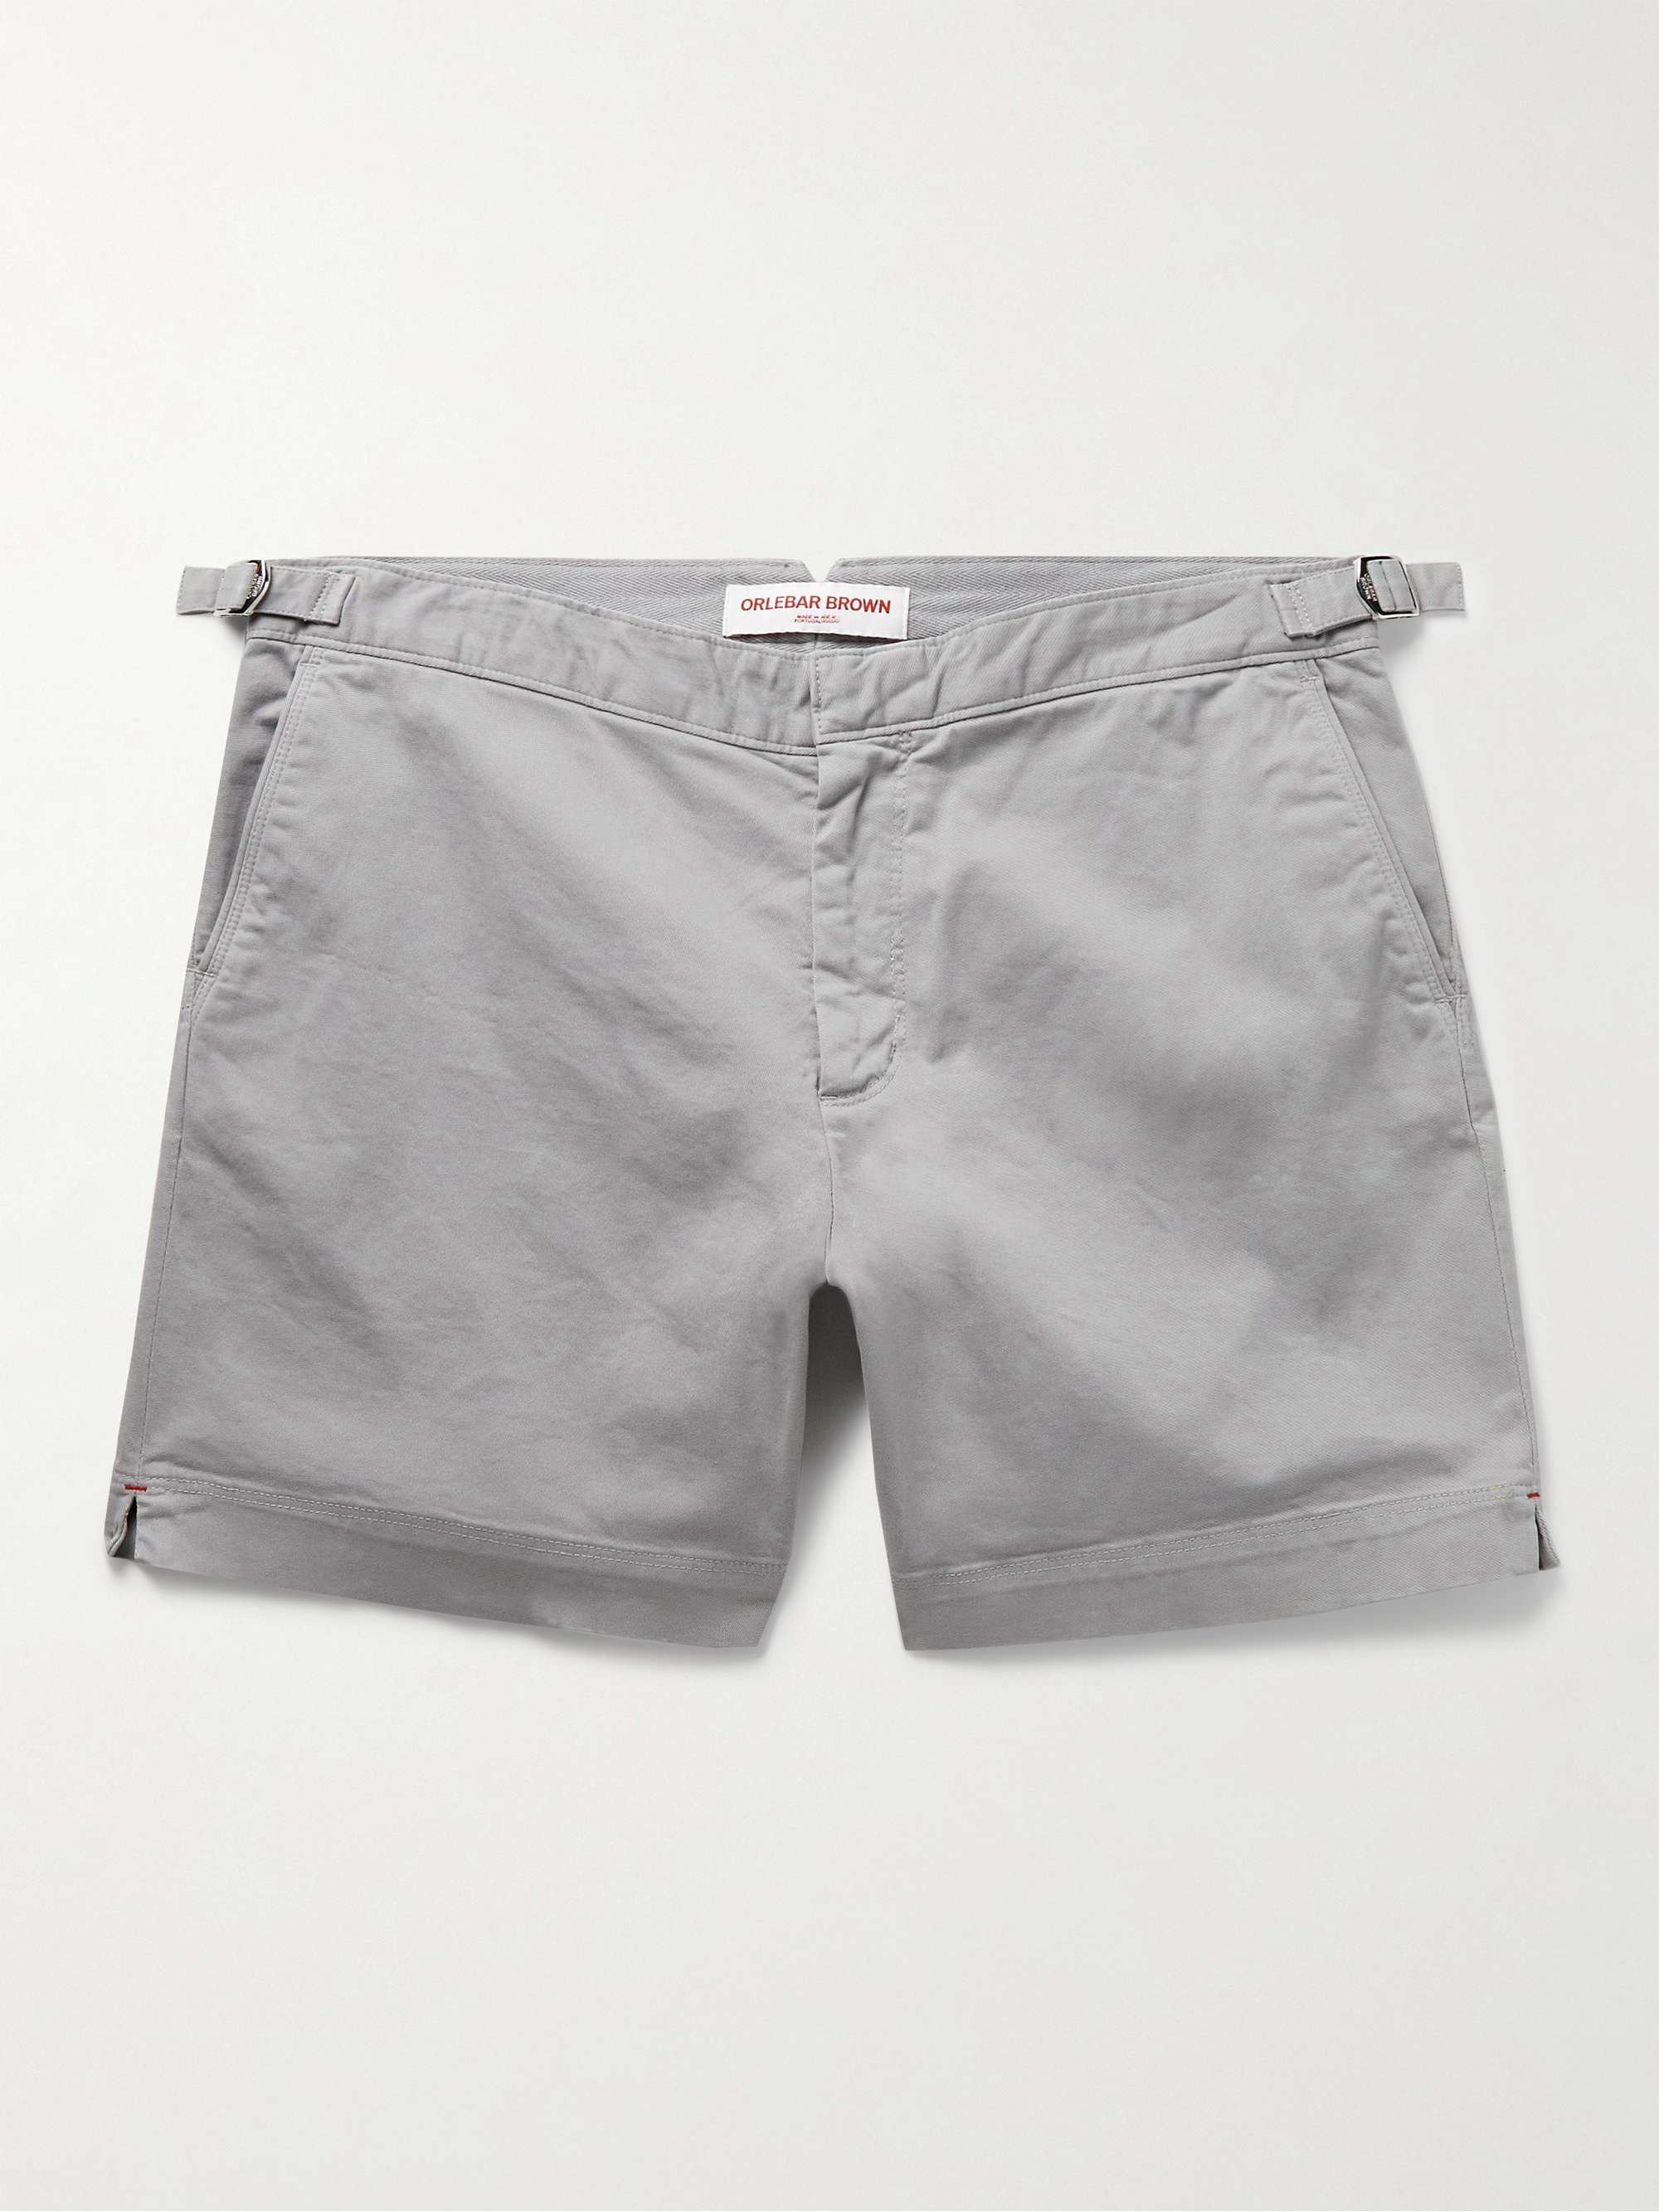 ORLEBAR BROWN Bulldog Slim-Fit Cotton-Blend Twill Shorts for Men | MR PORTER